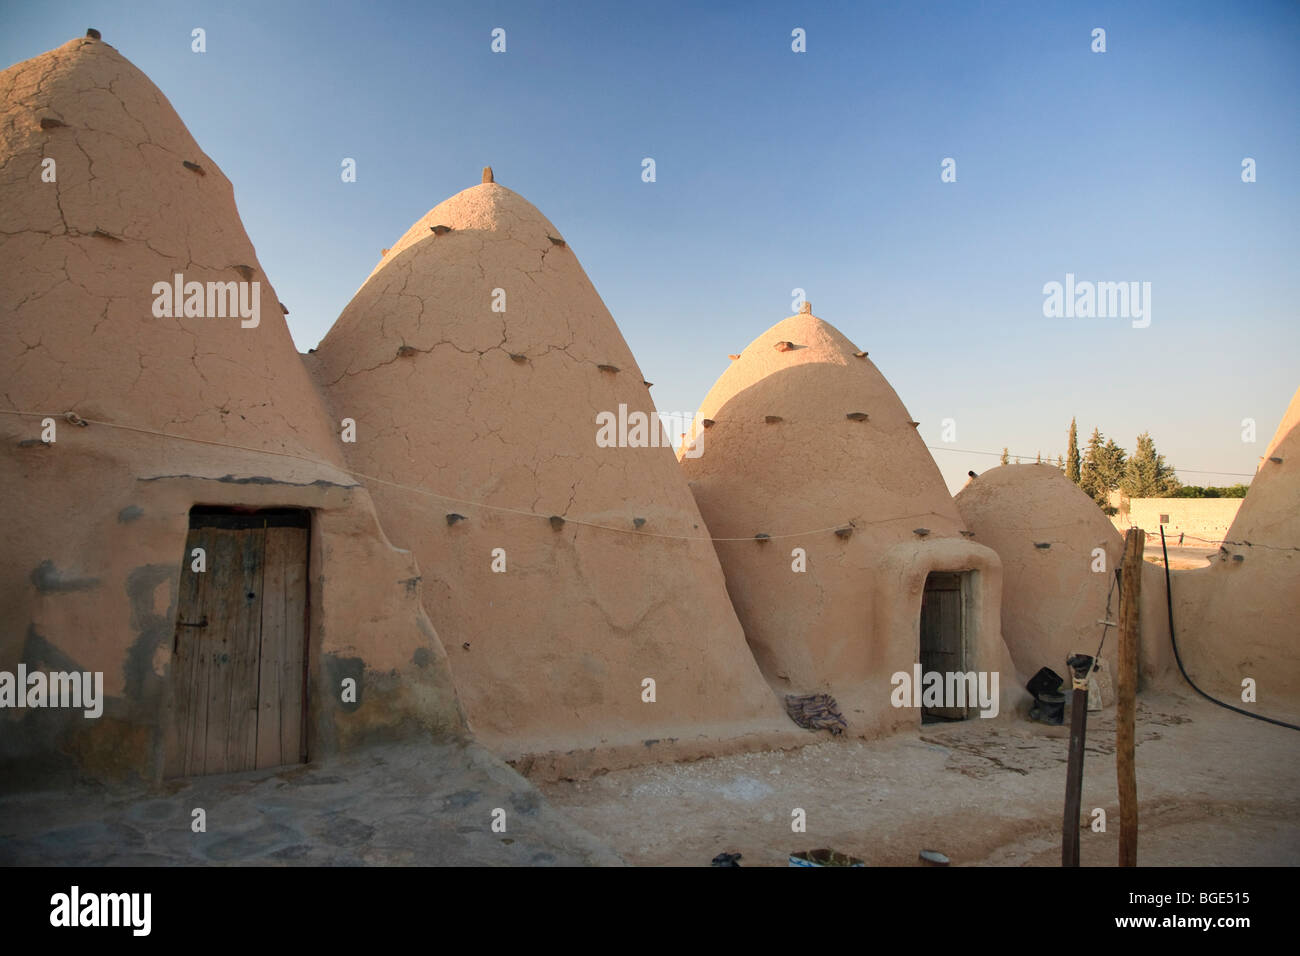 Syria, Hama surroundings, the Beehive Village of Sarouj, made of mud dwellings Stock Photo